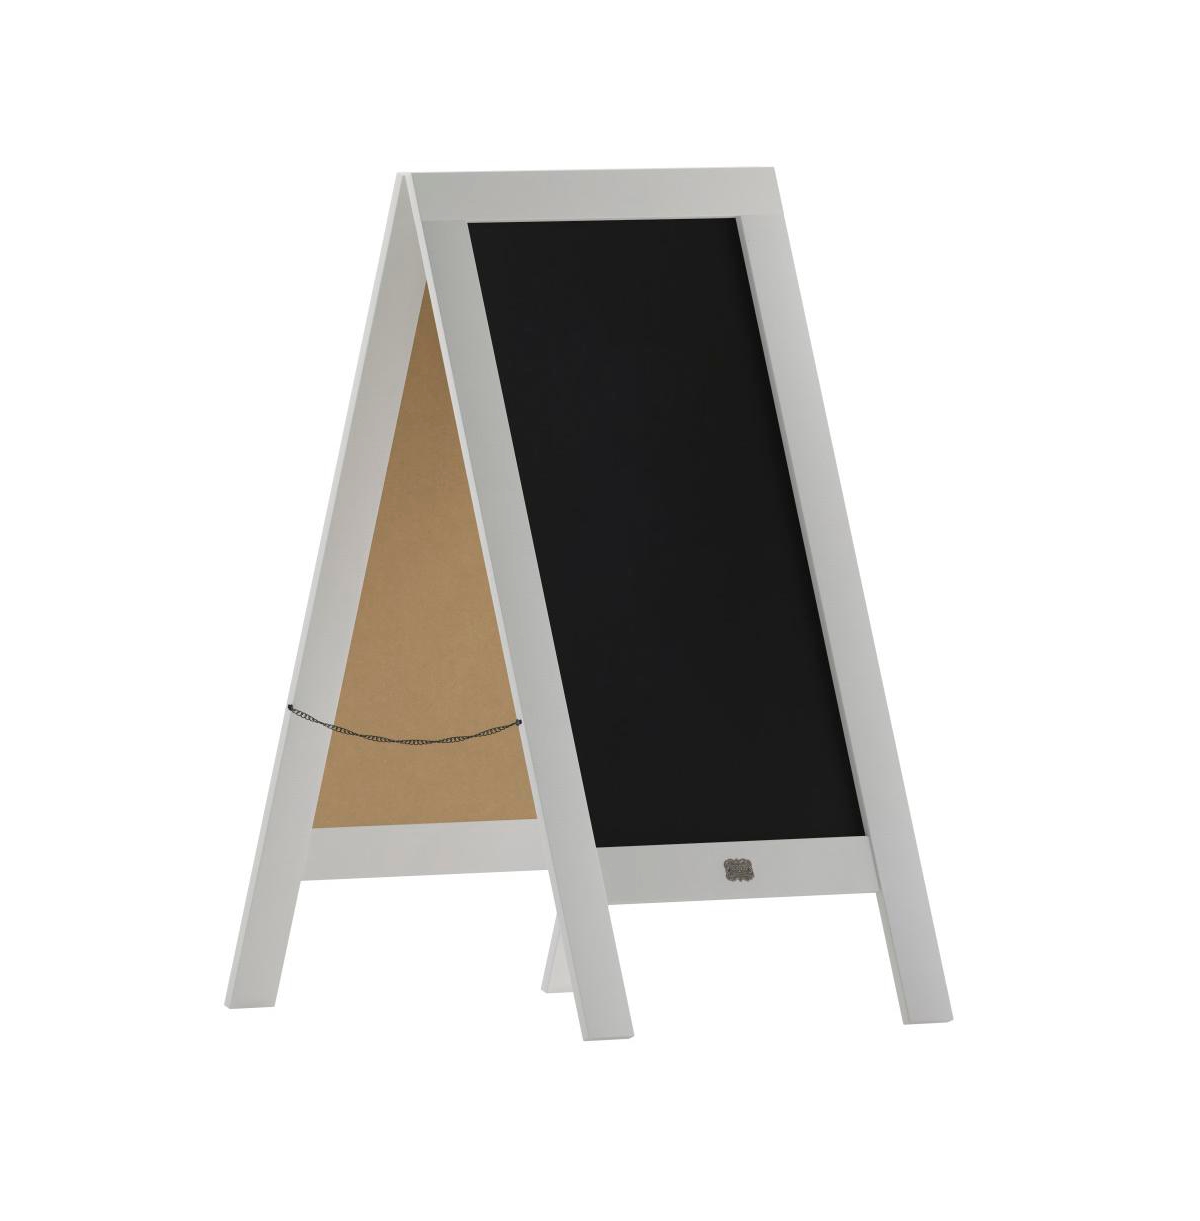 A-Frame Chalkboard / Sidewalk Chalkboard Sign / Large Sturdy Sandwich Board / A Frame Restaurant Message Board - Solid white